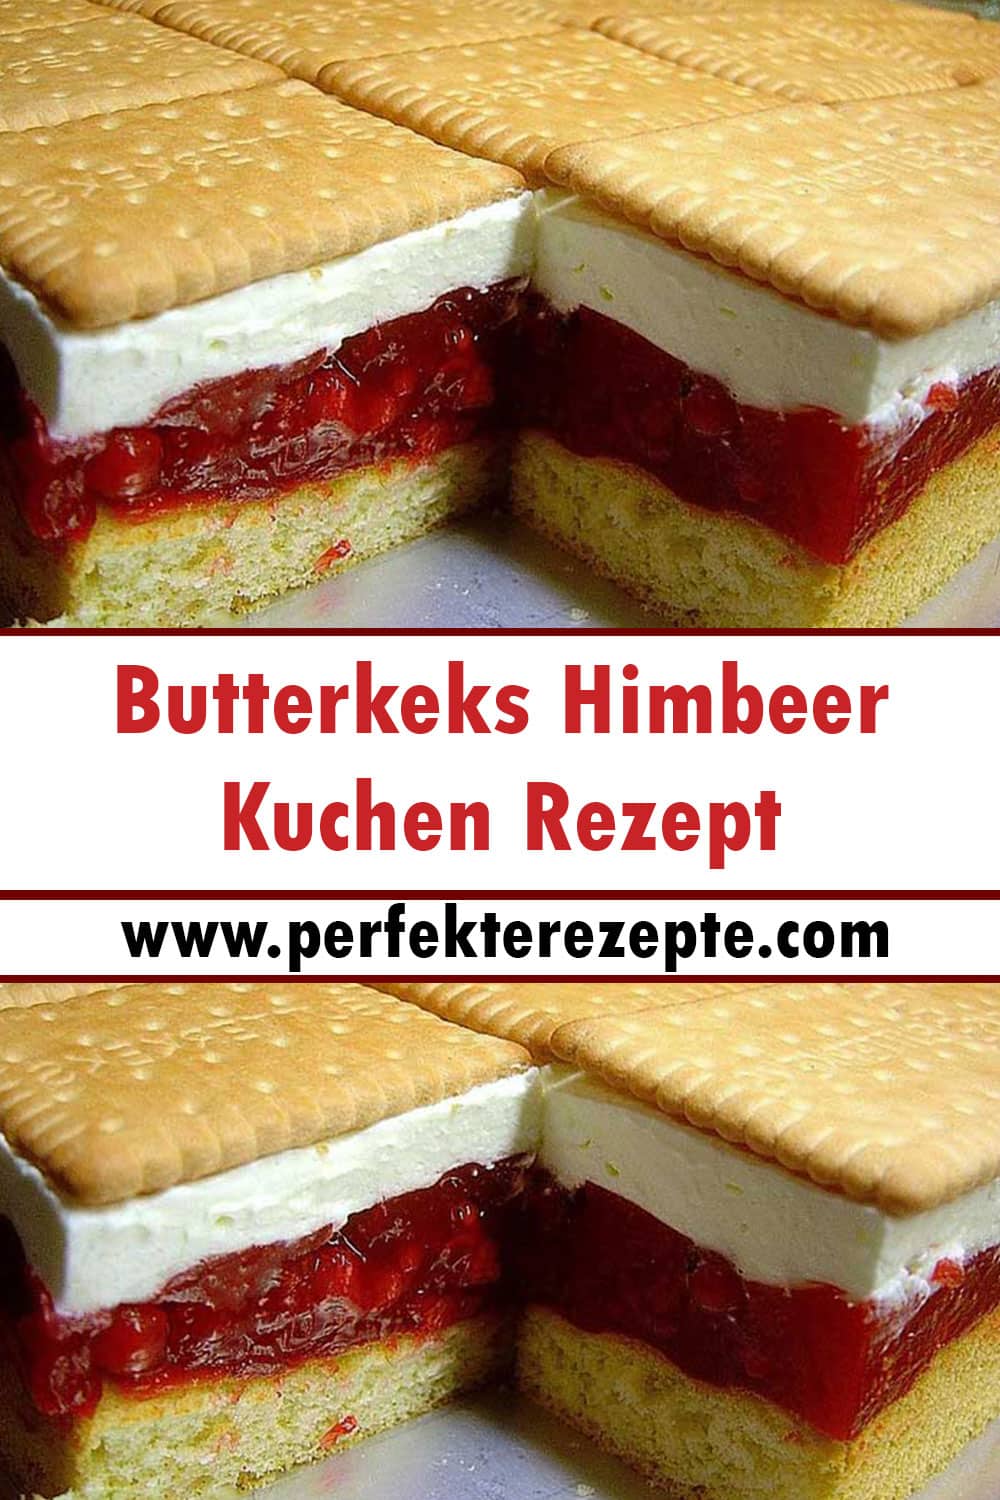 Butterkeks Himbeer Kuchen Rezept